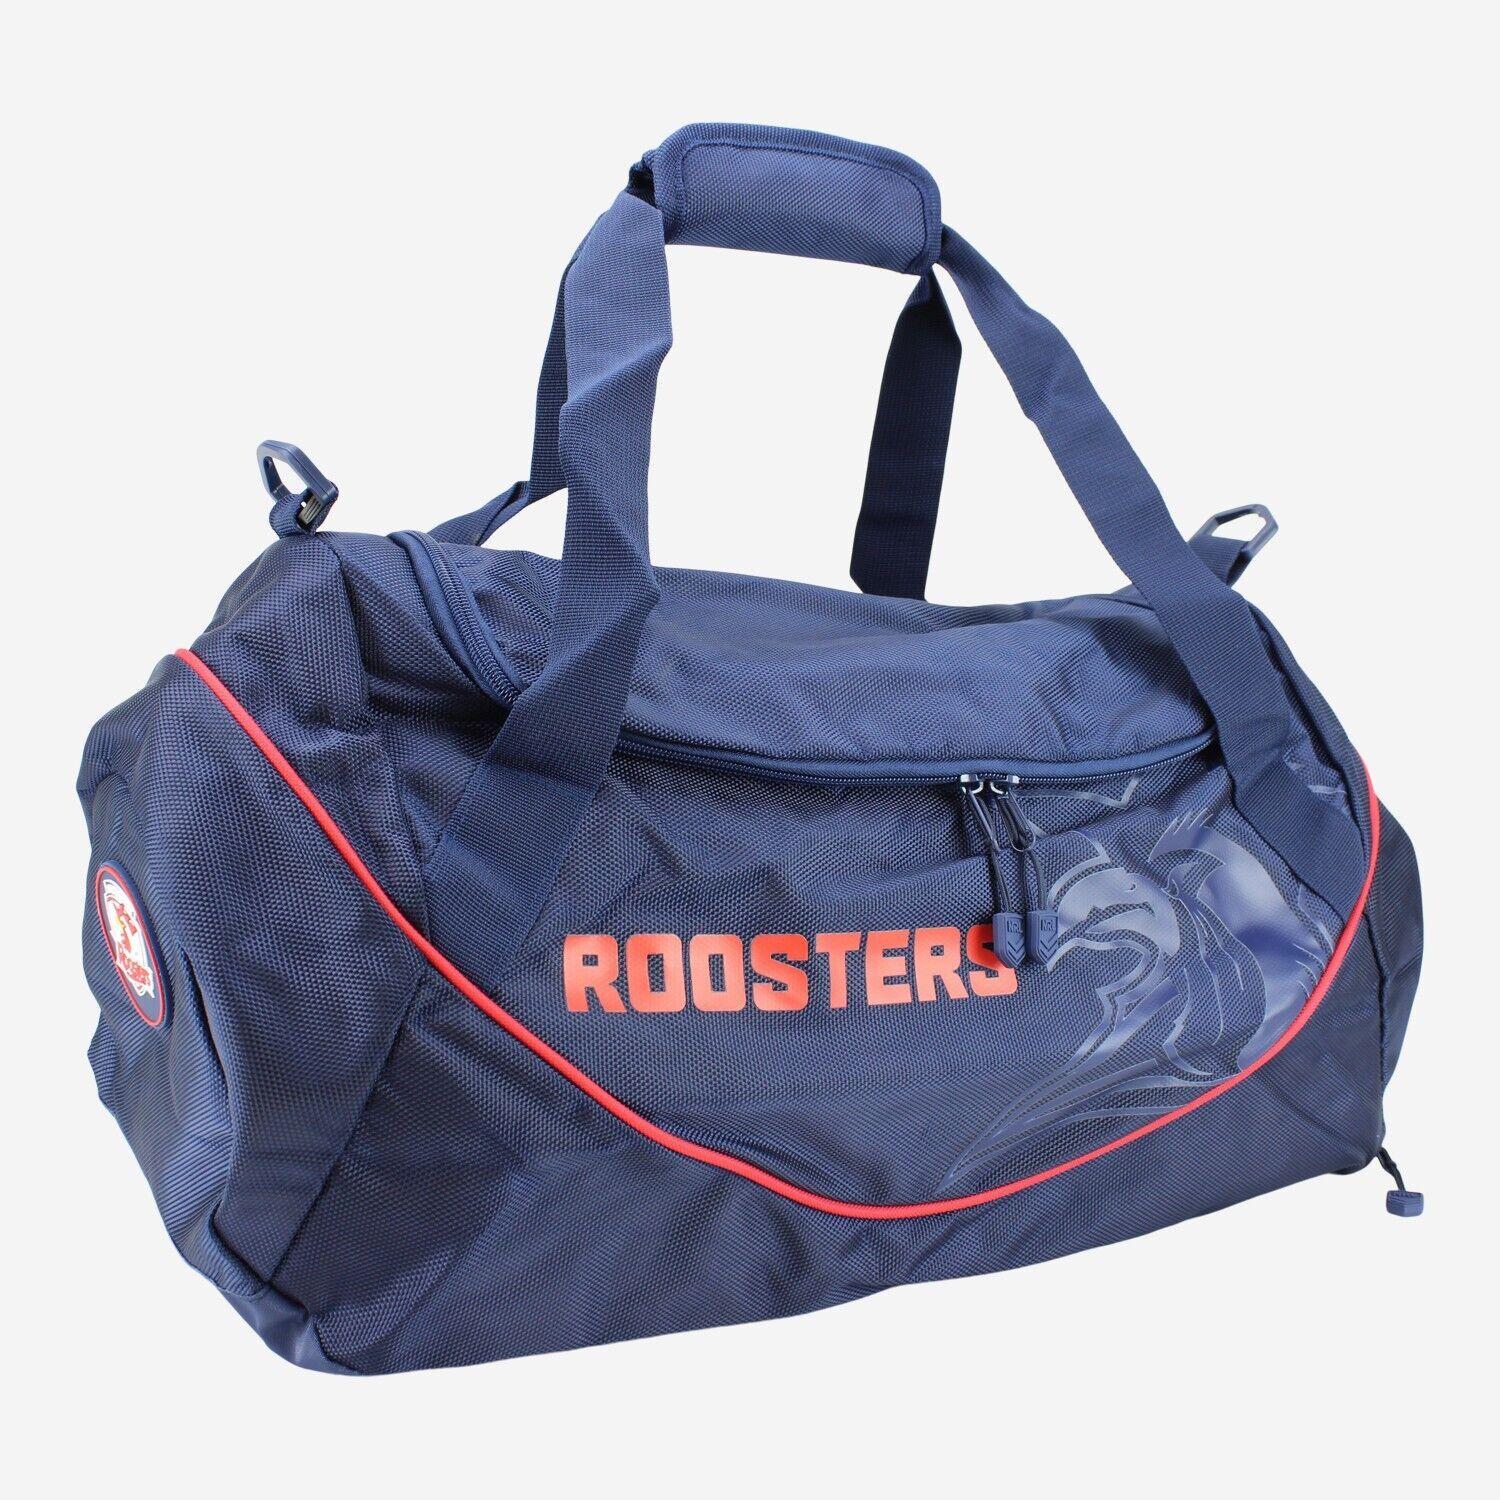 NRL Shadow Sports Bag - Sydney Roosters - Gym Travel Duffle Bag